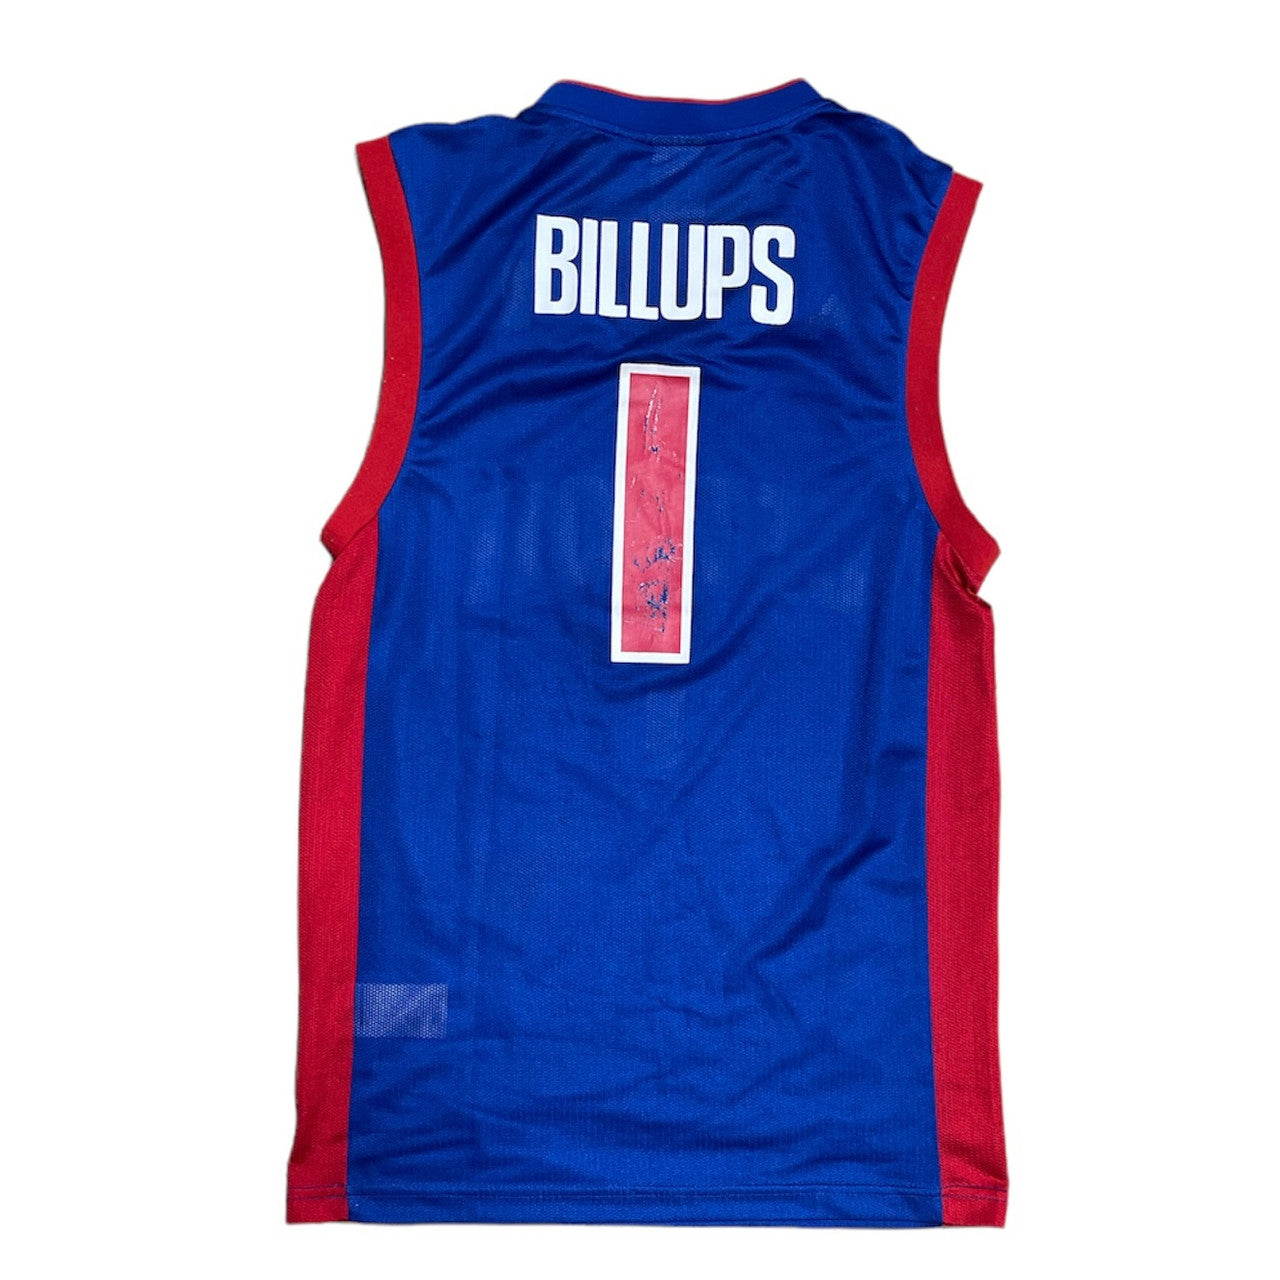 Adidas Detroit Pistons NBA Billups Jersey